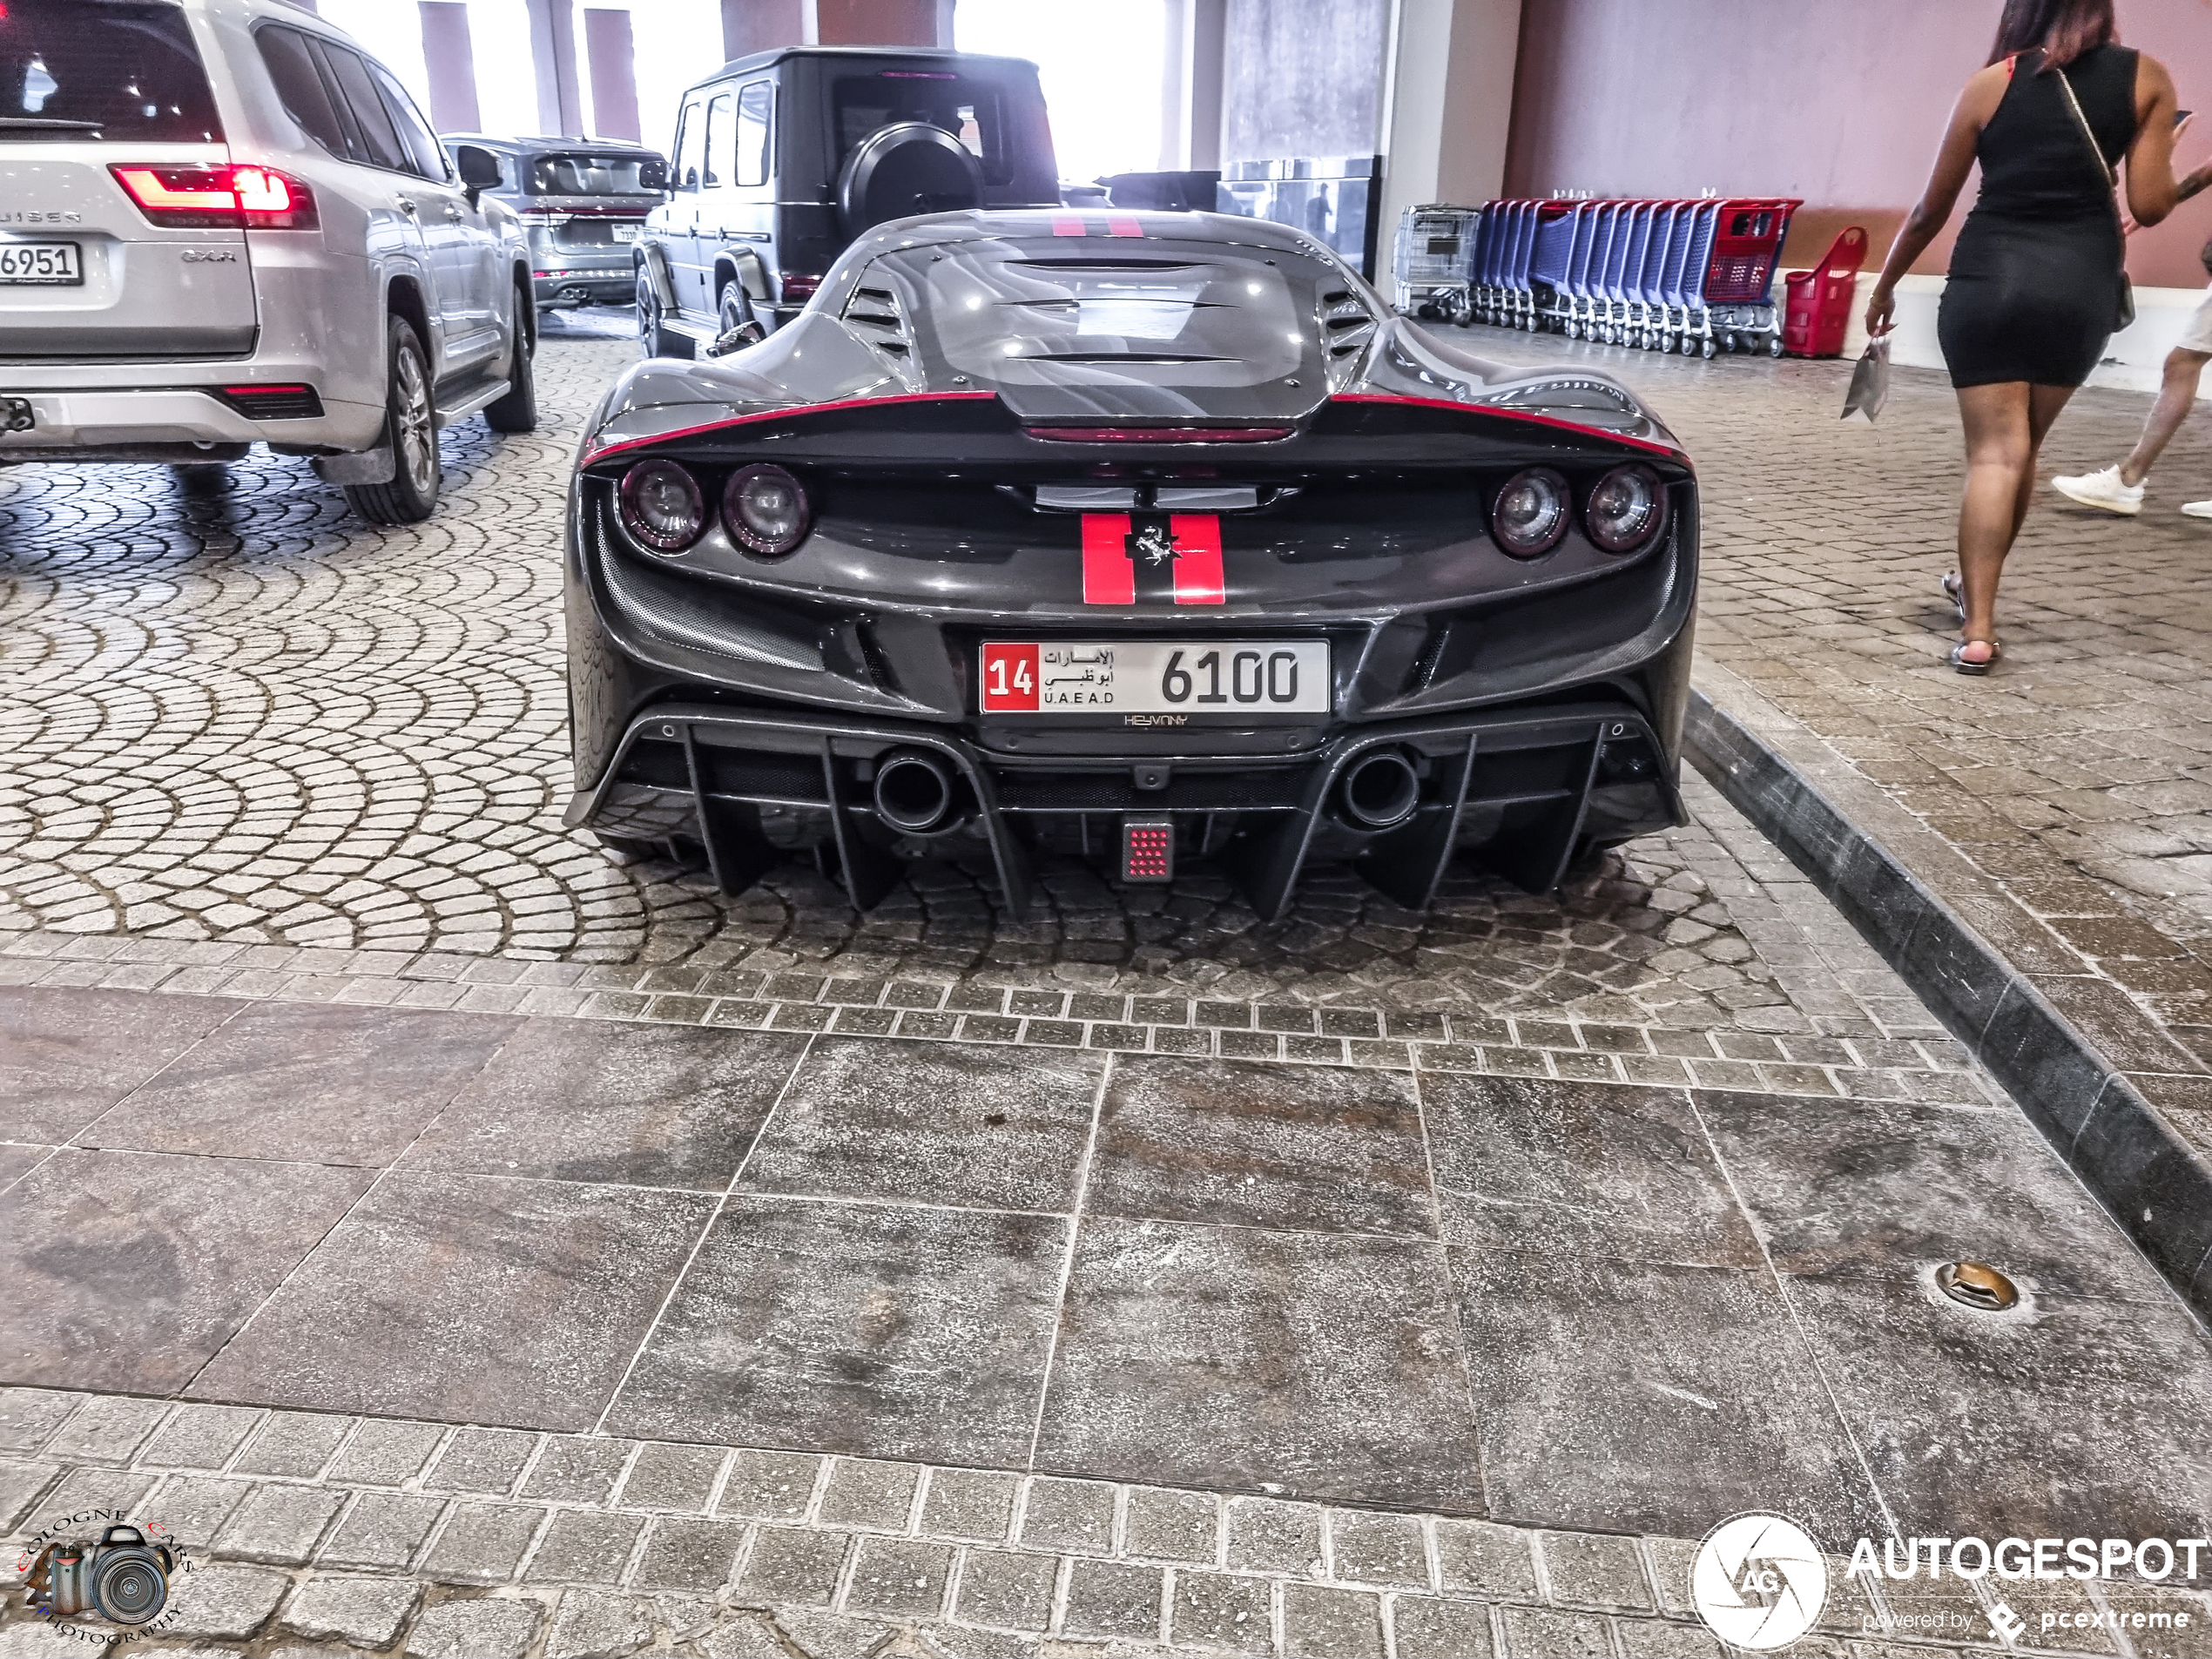 Spotten in Dubai nog altijd genot: Ferrari Keyvany F8 835 SuperTributo